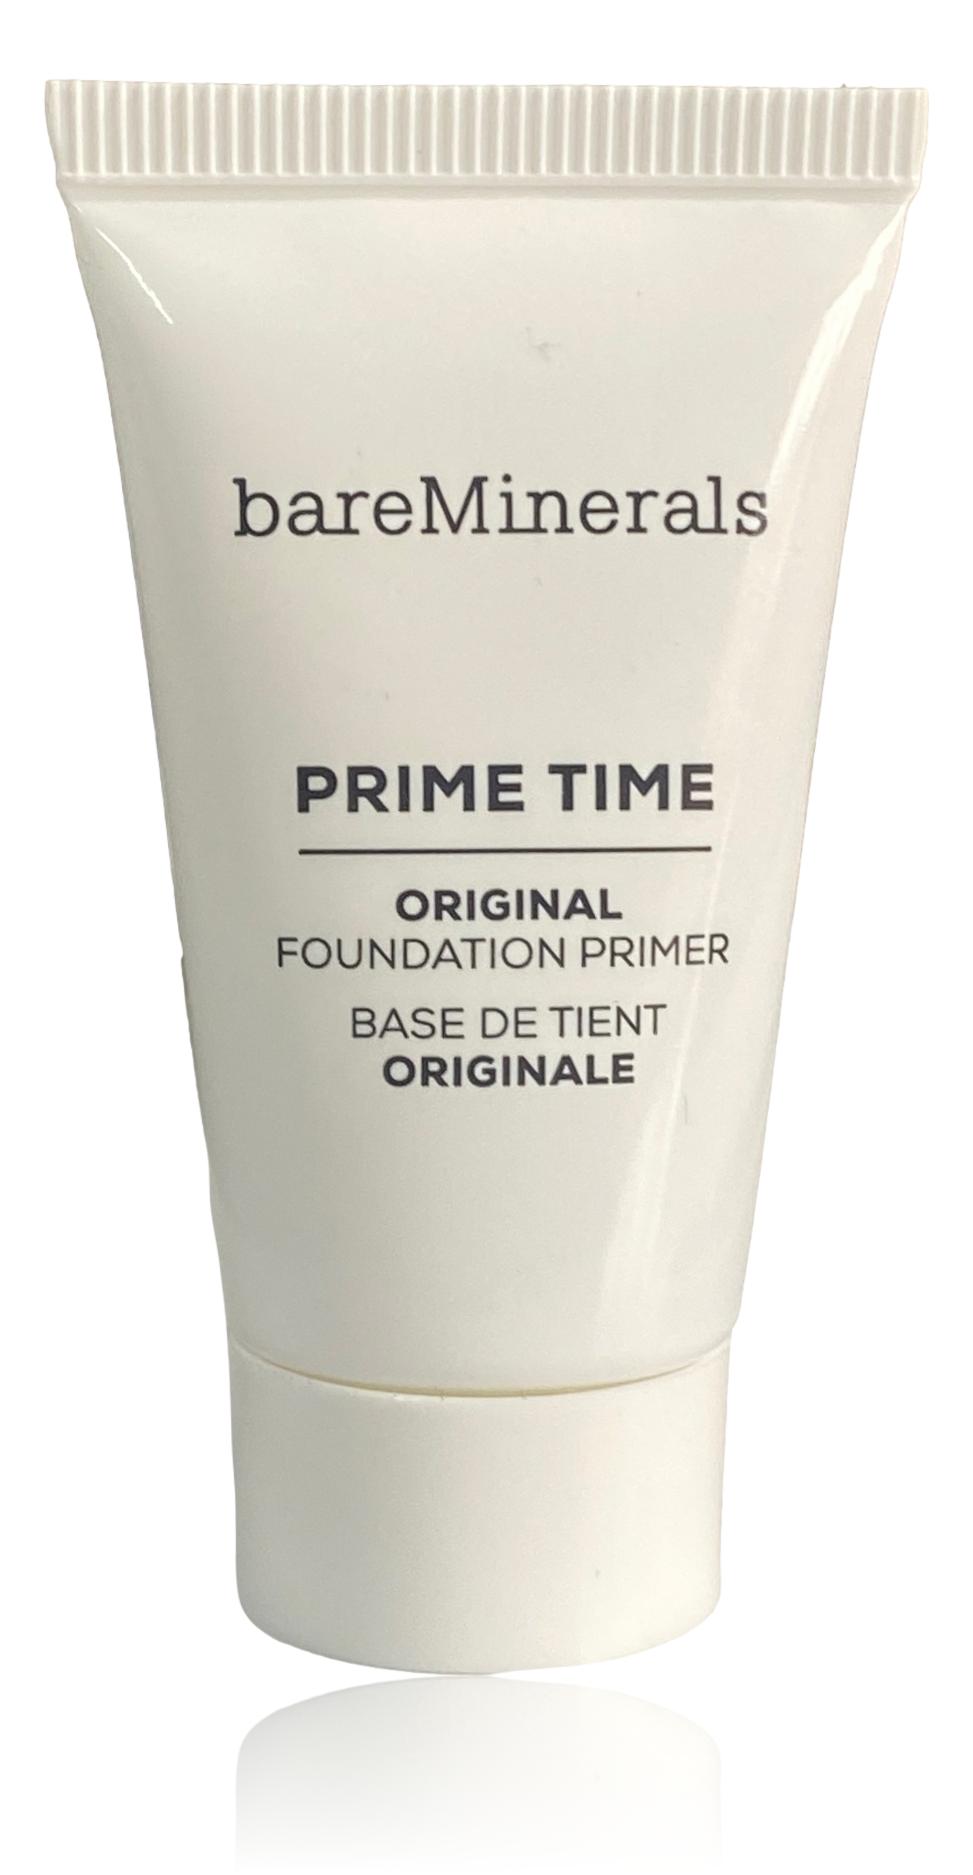 bareMinerals Prime Time Original Foundation Primer (15ml) Travel Size